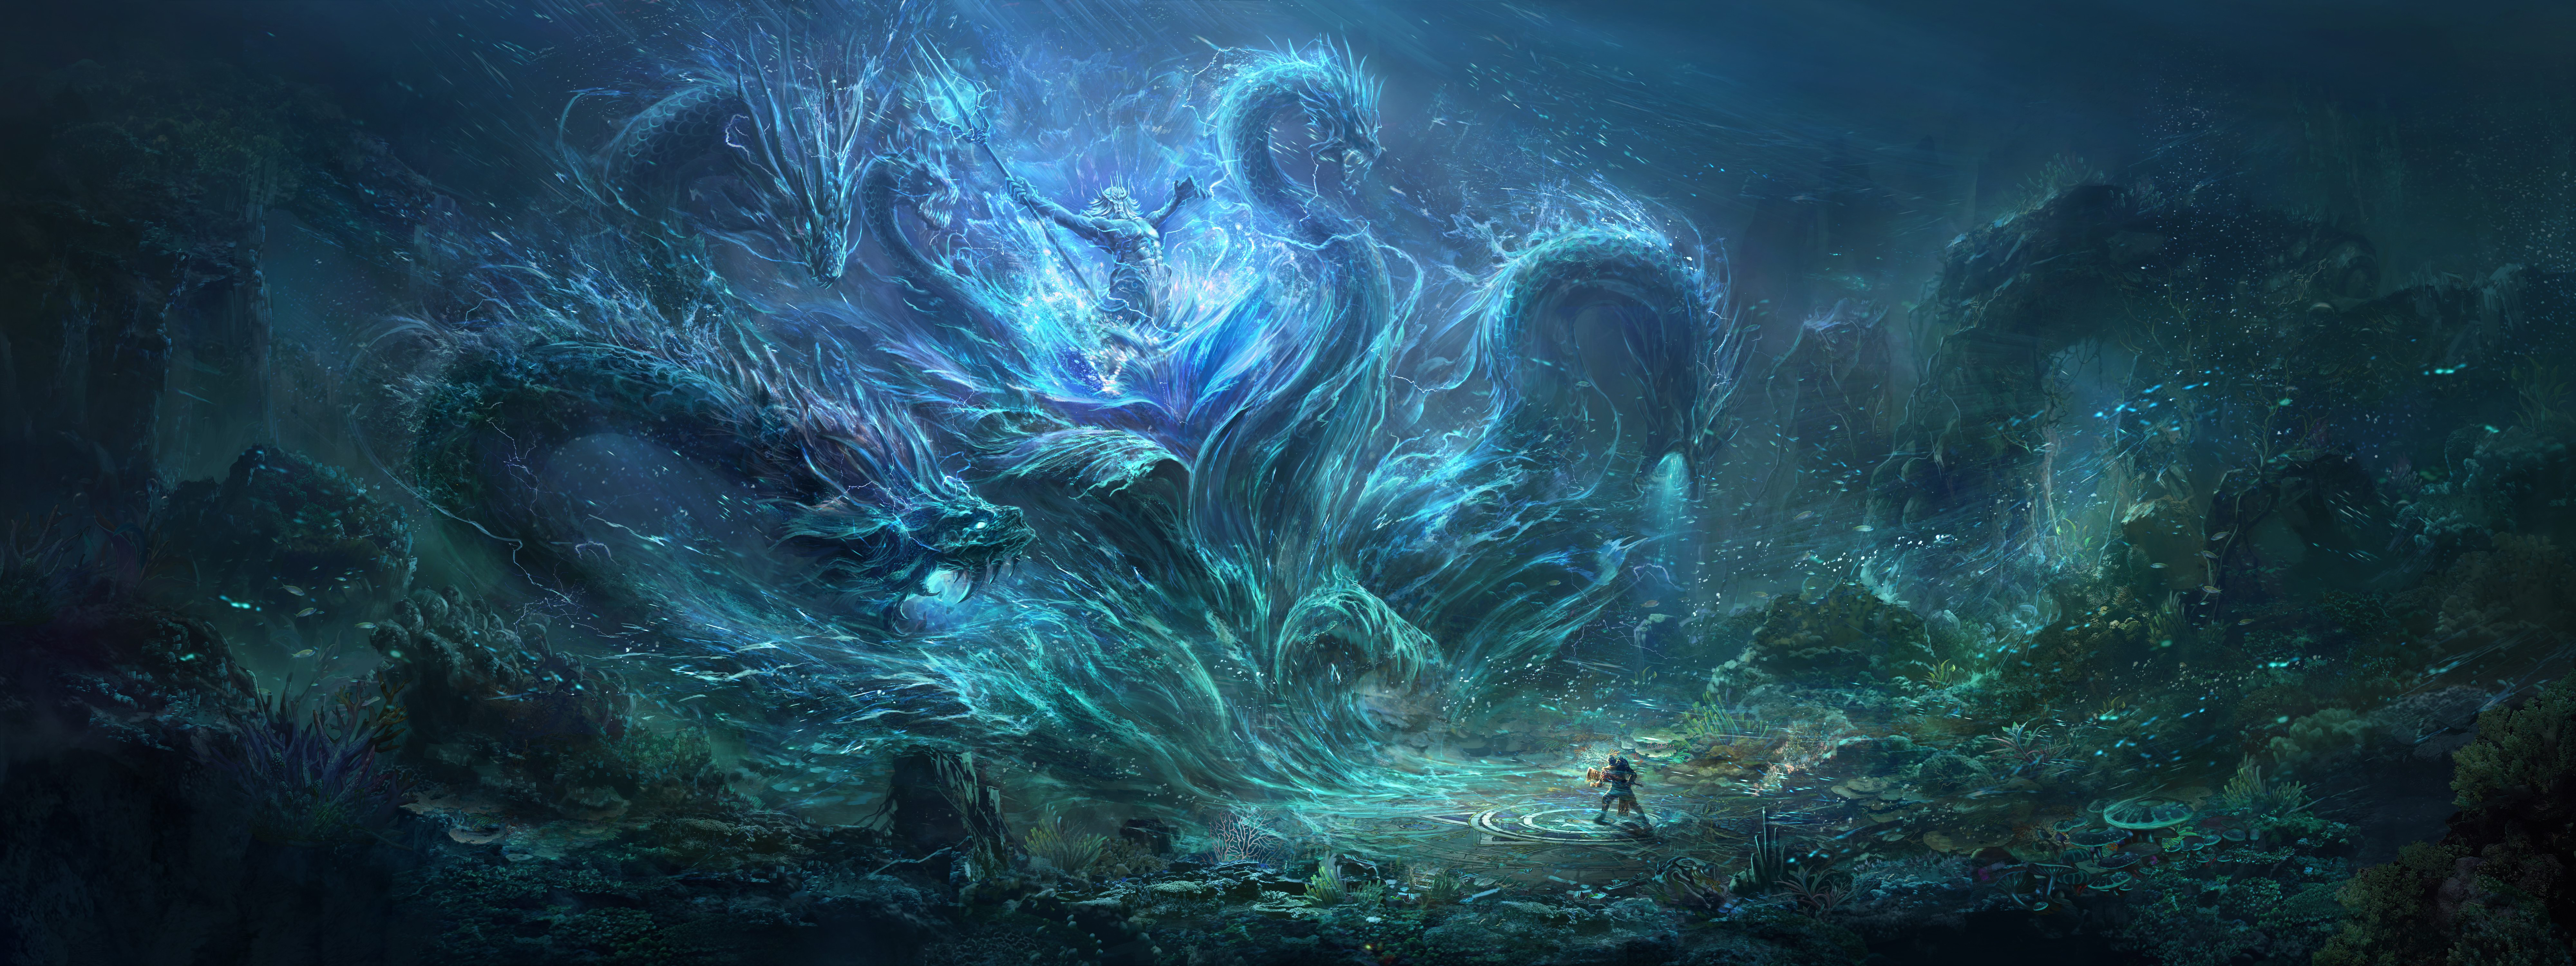 Sea Monsters by Wang Nan